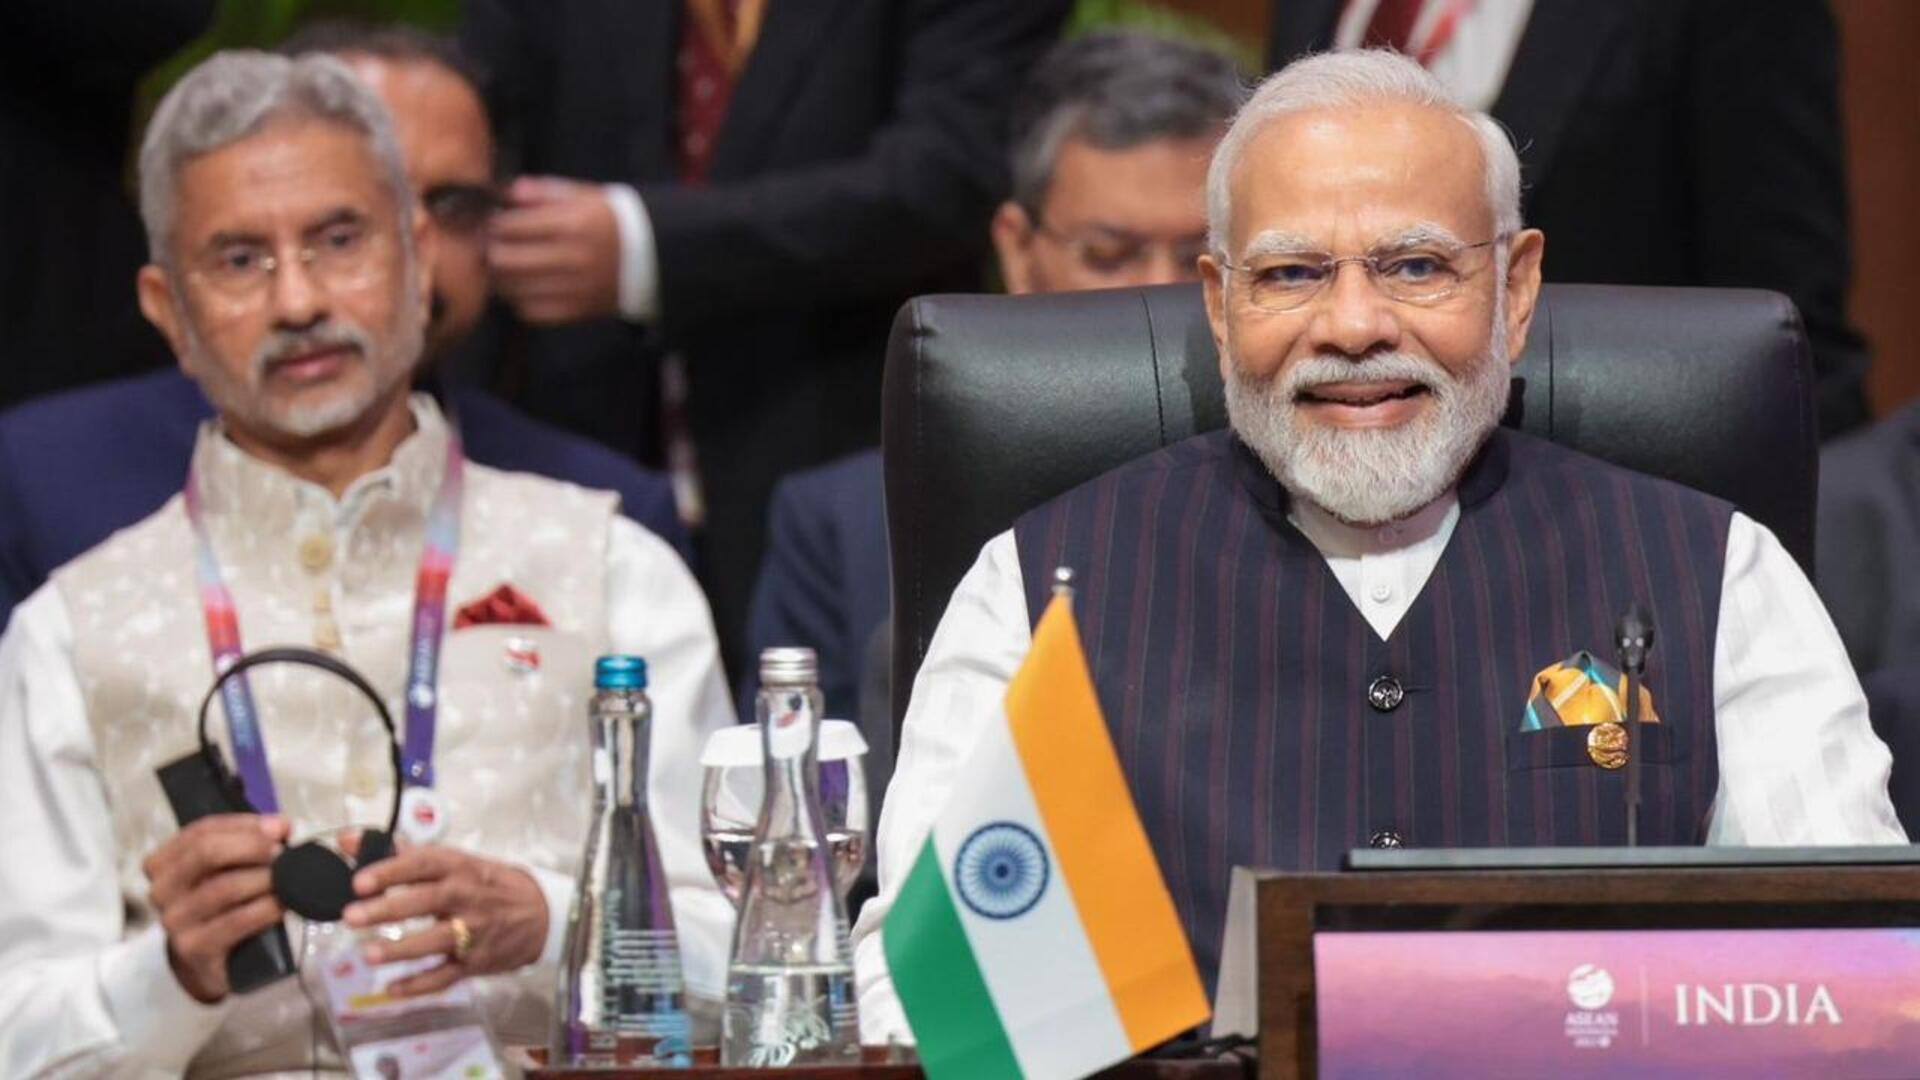 कनाडा-भारत विवाद के बीच प्रधानमंत्री मोदी से मिले विदेश मंत्री एस जयशंकर